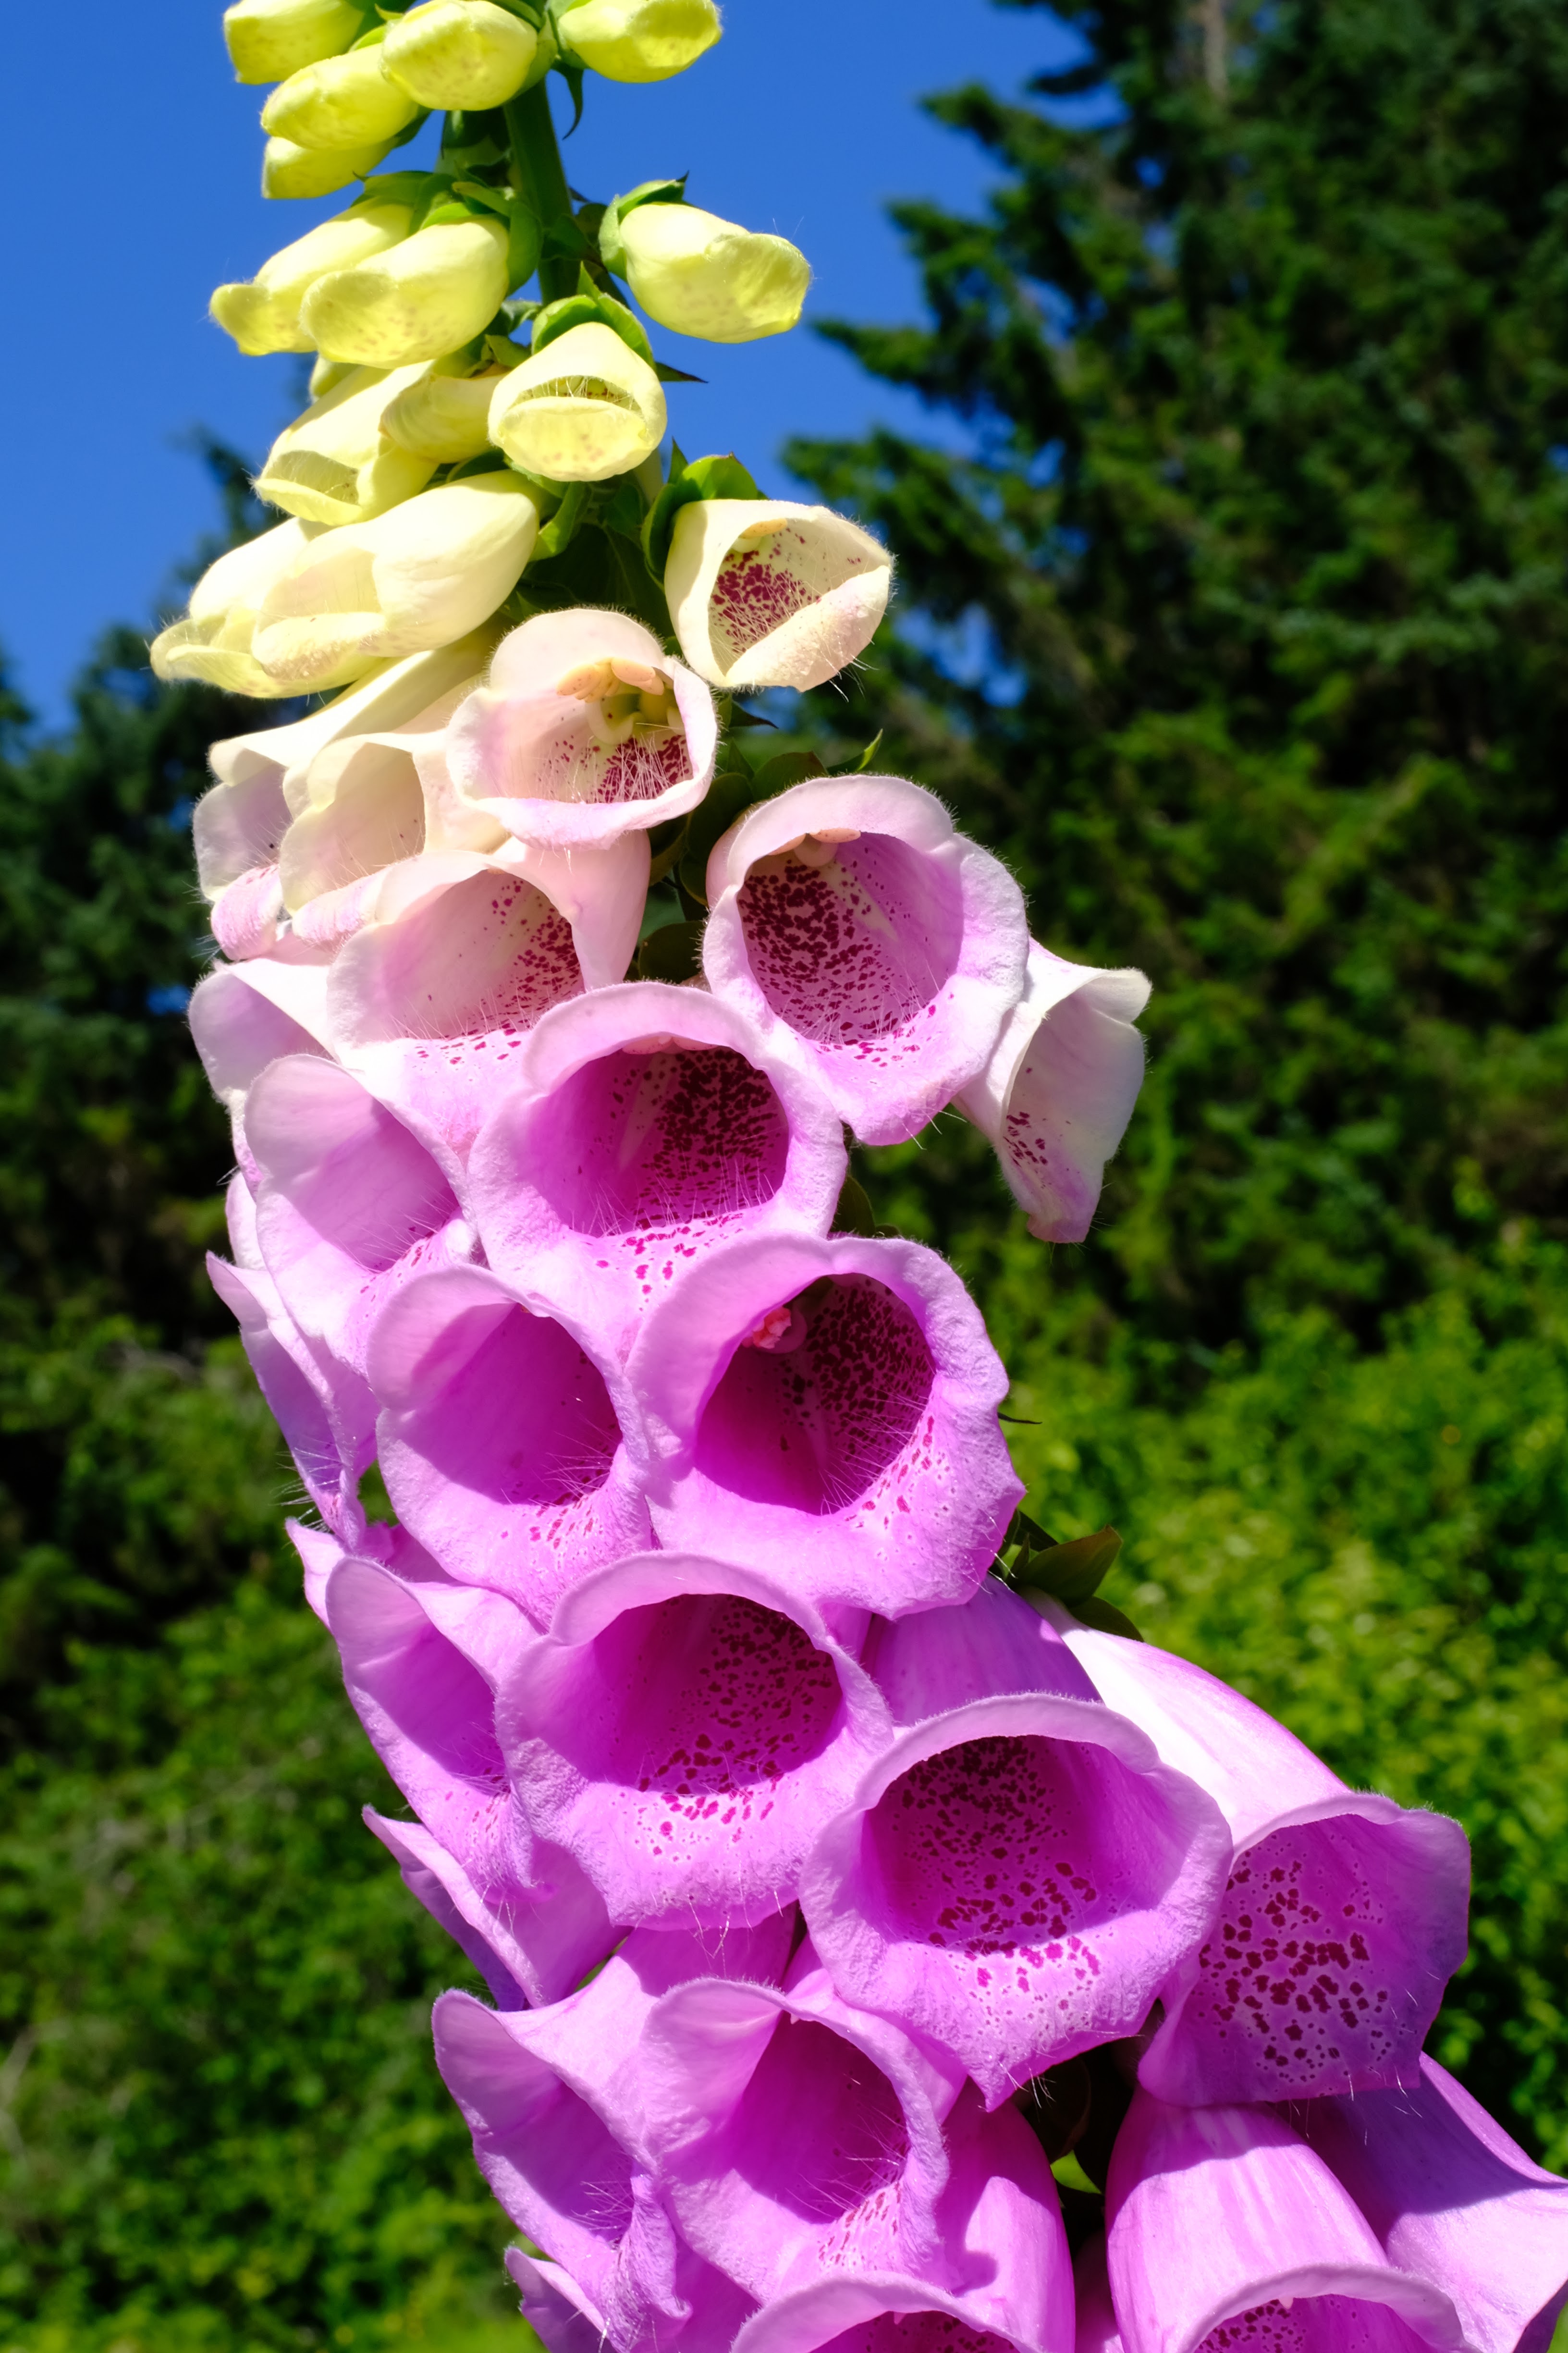 Close up of fuscia-colored flowers at the arboretum.